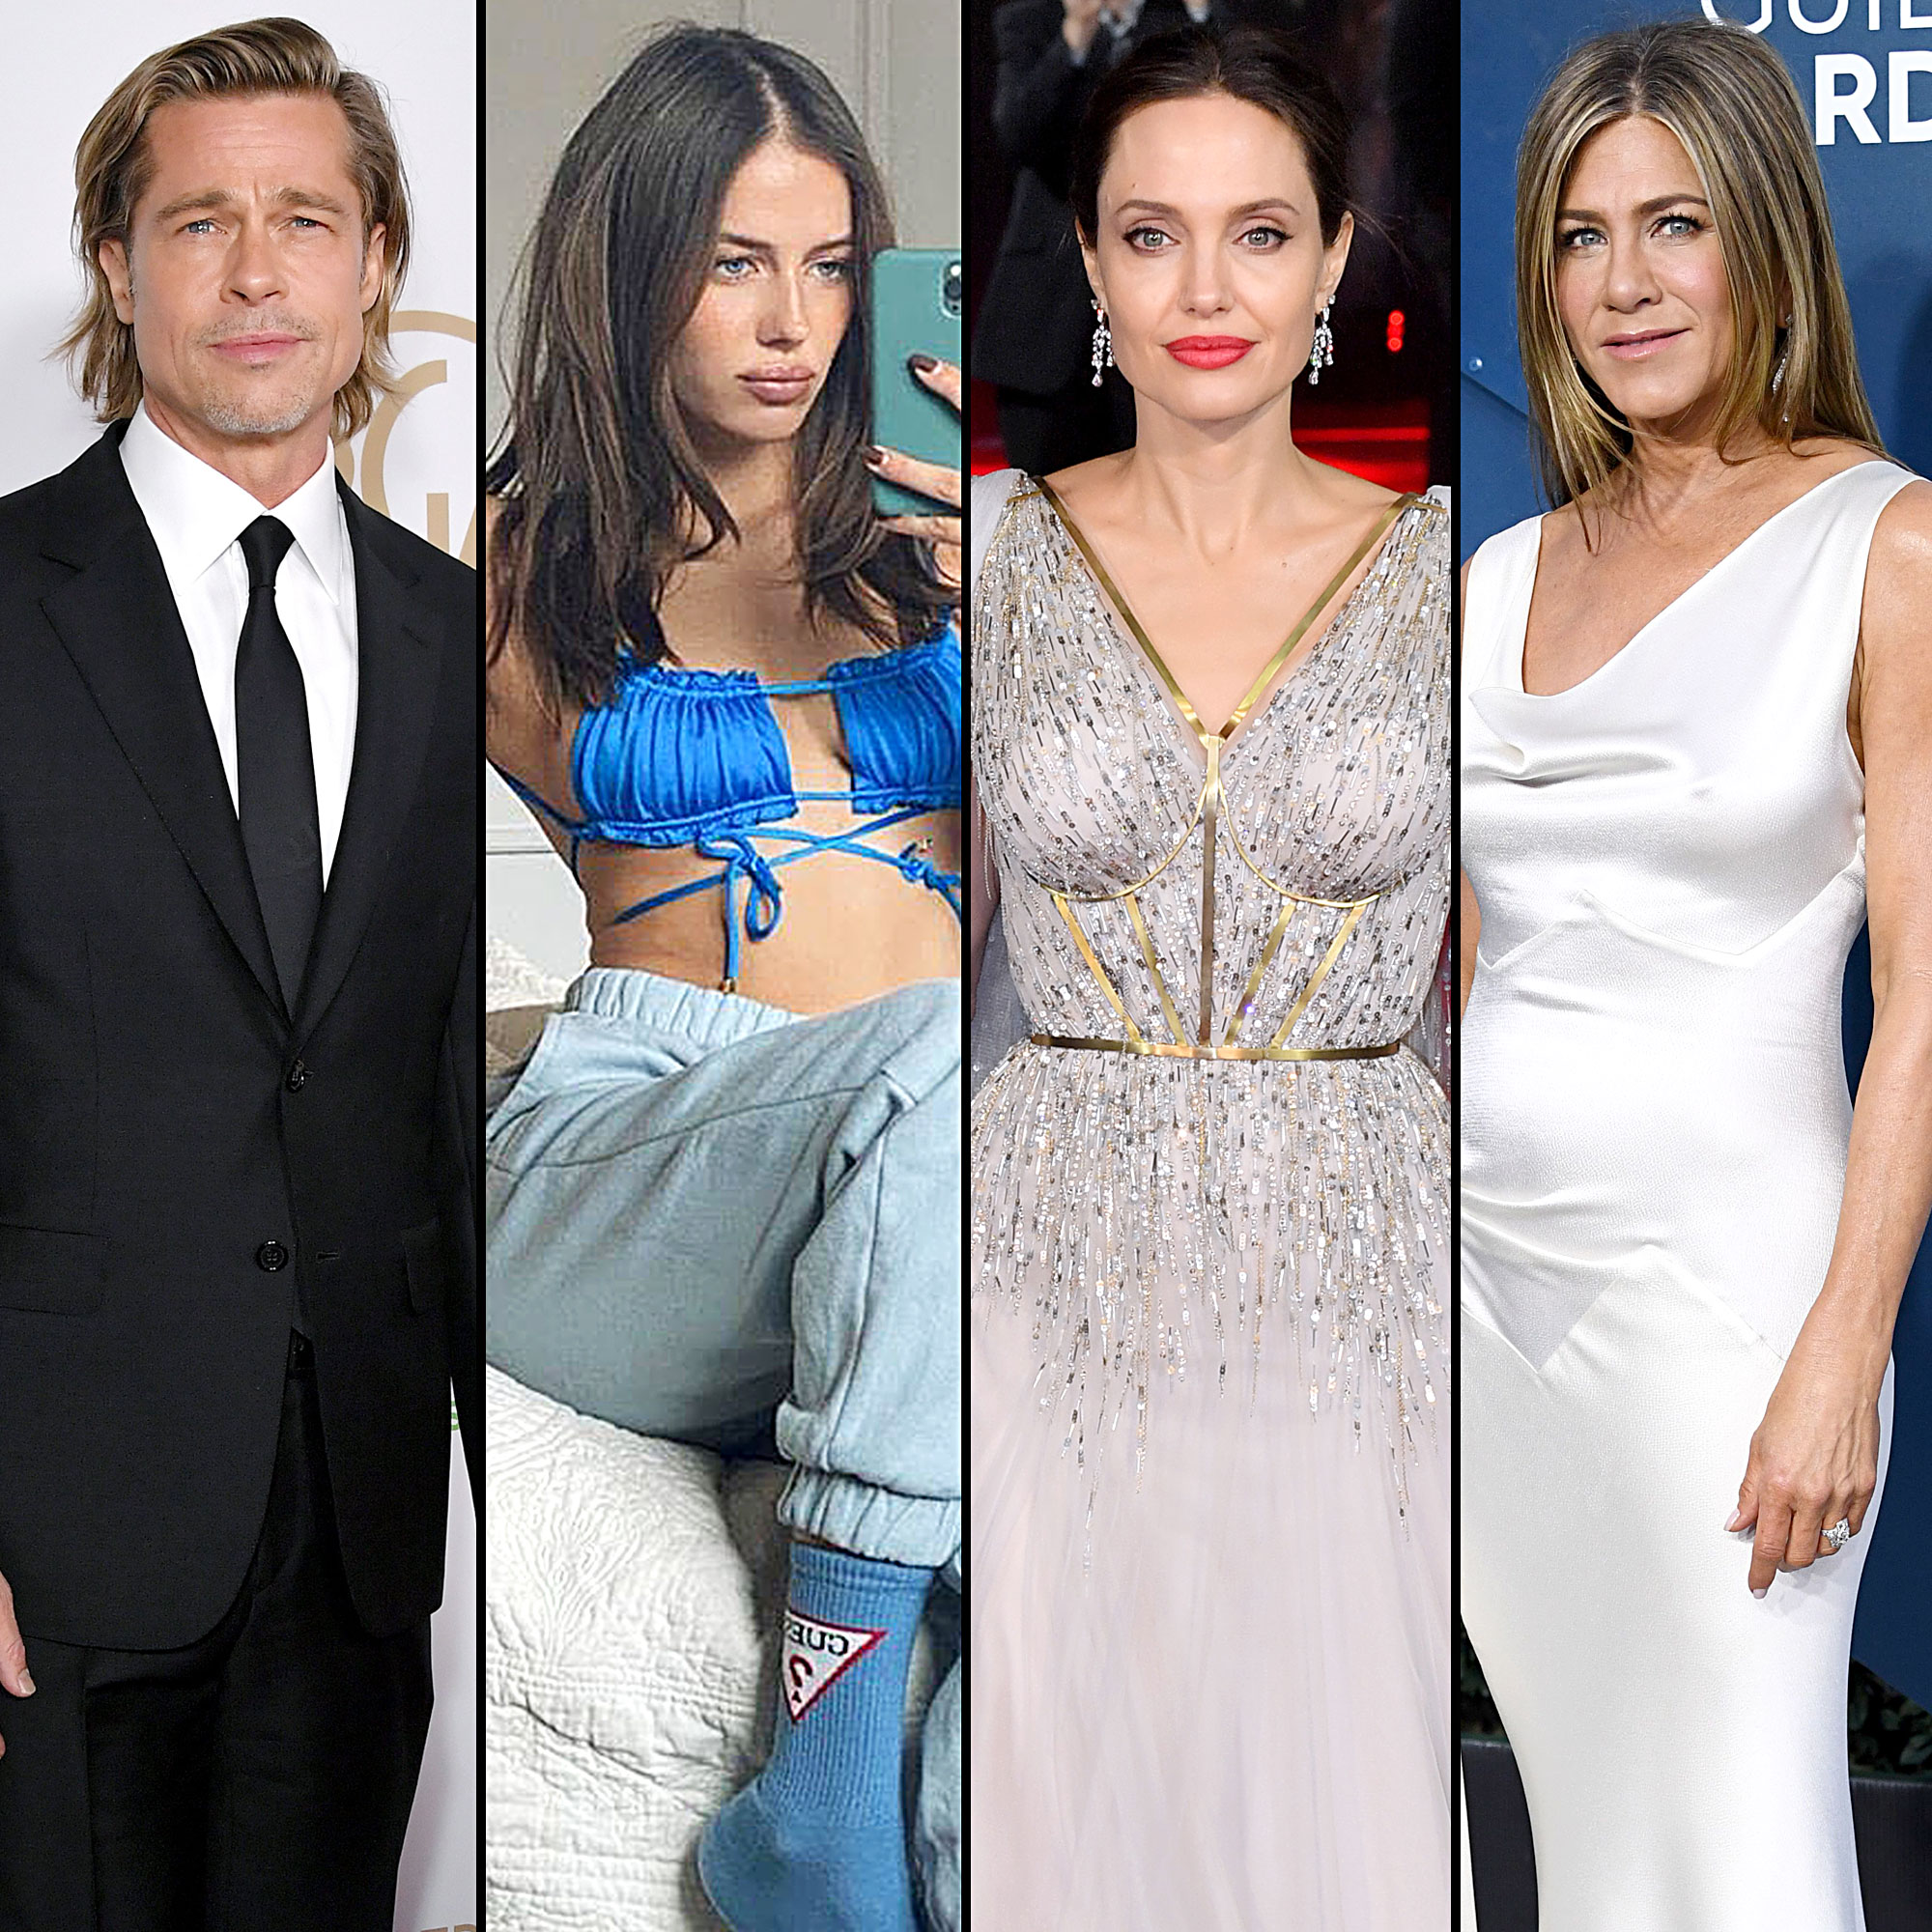 Angelina Jolie-Brad Pitt: A Timeline of Their Marriage, Divorce